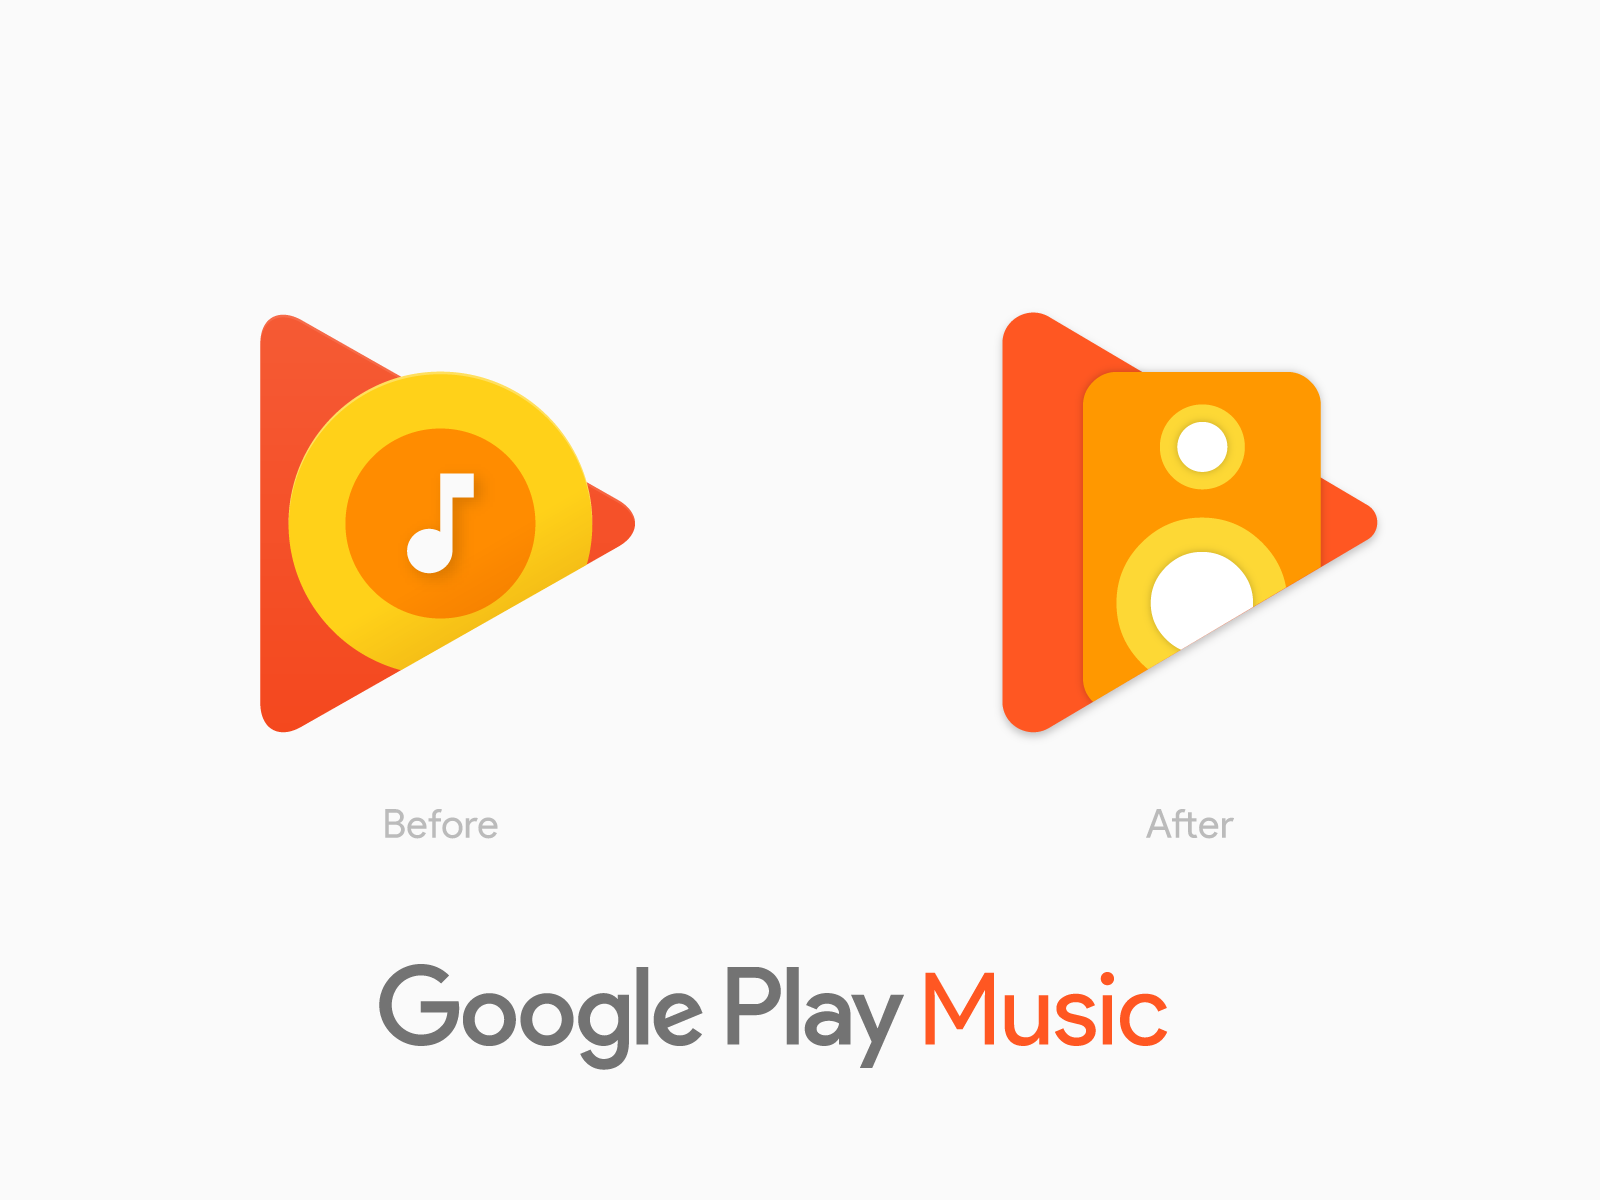 Well play music. Гугл плей. Google Play Music. Гугл плей лого. Google Play Music Google Play.